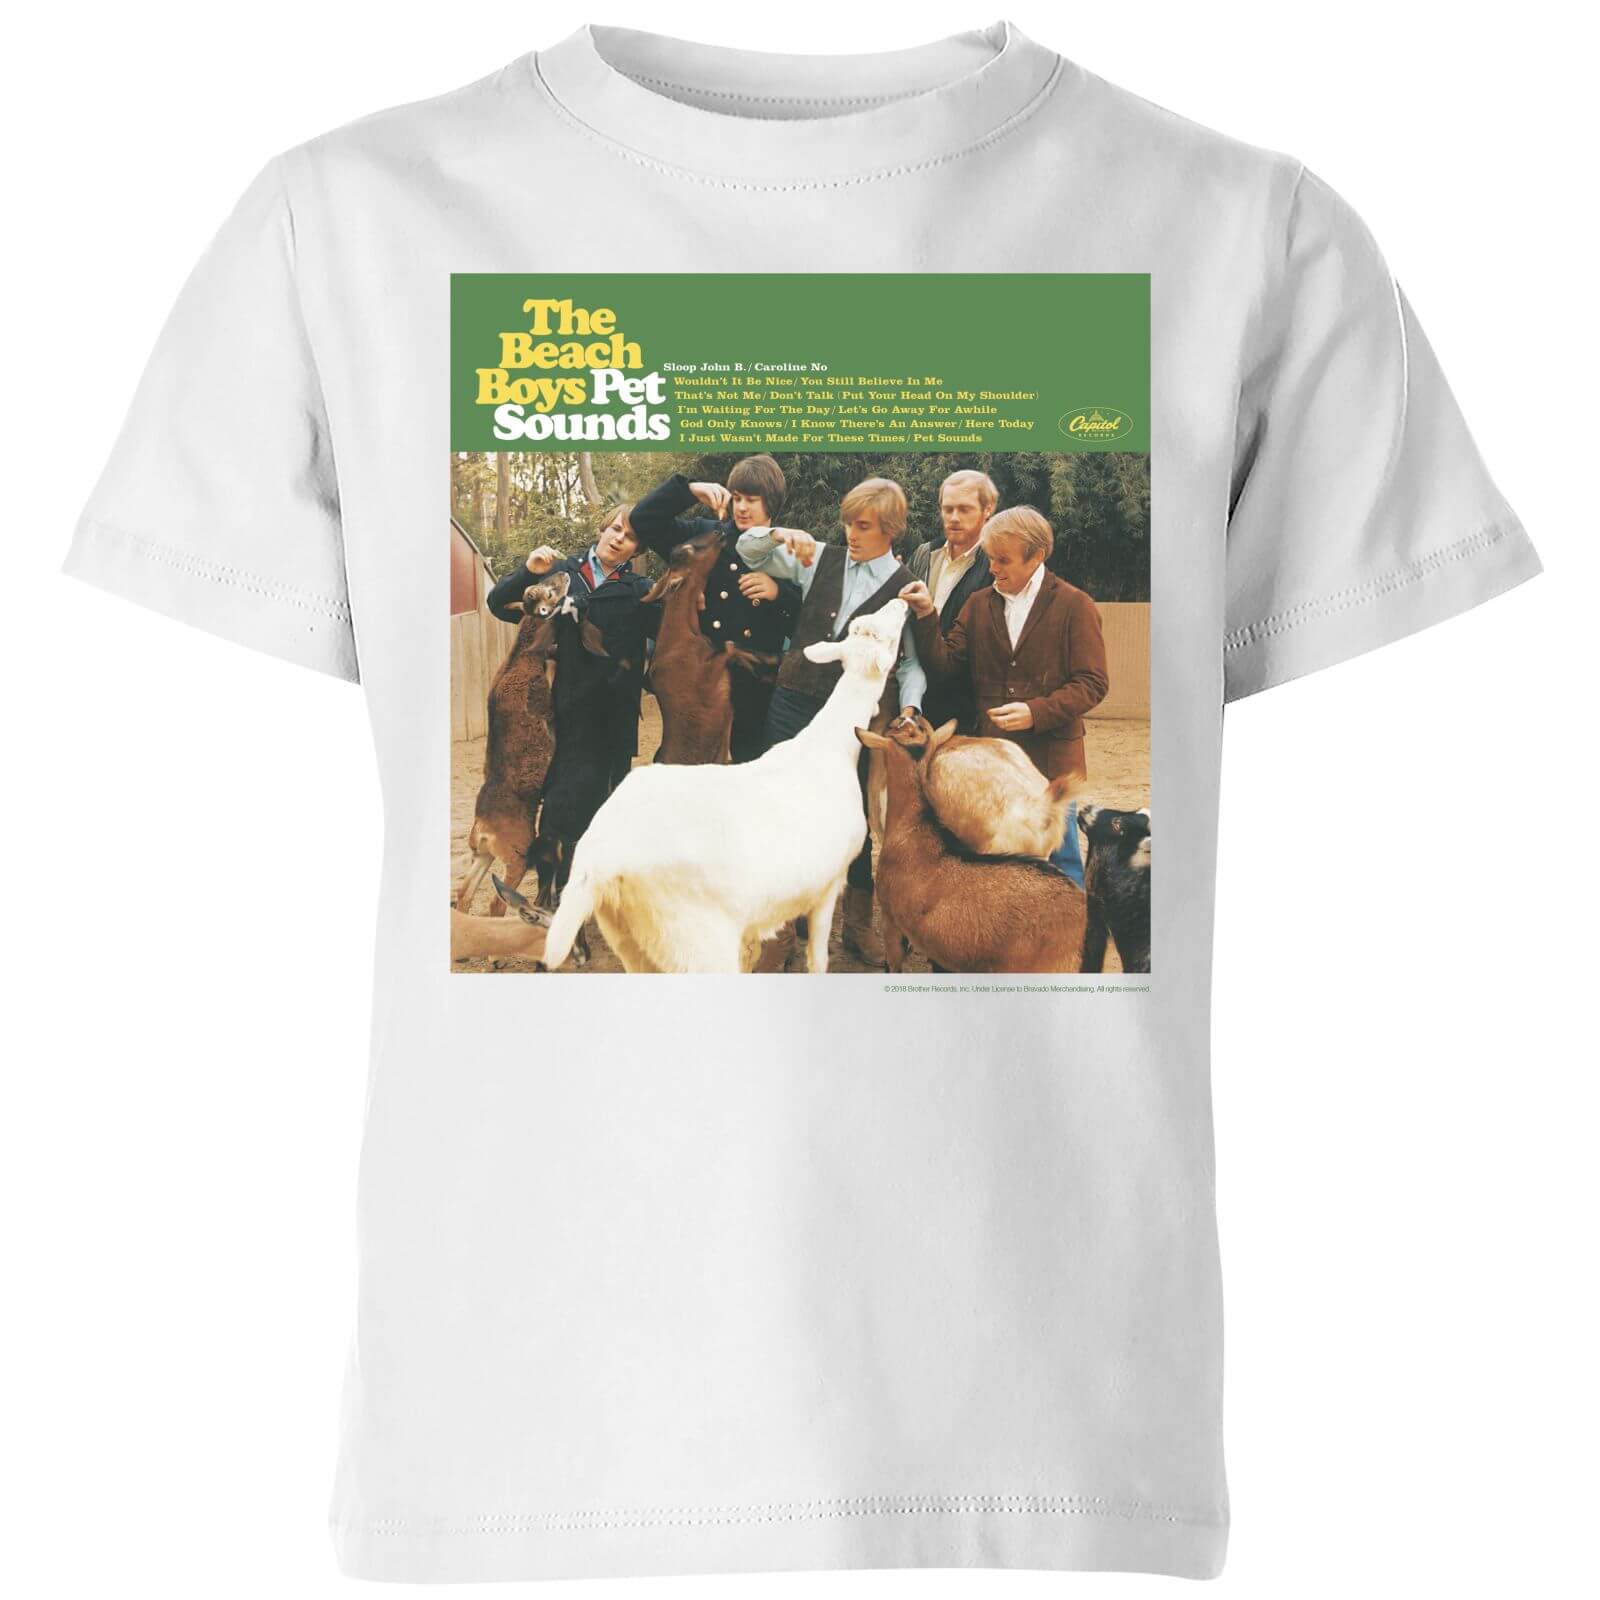 The Beach Boys Pet Sounds Kids' T-Shirt - White - 7-8 Years - White